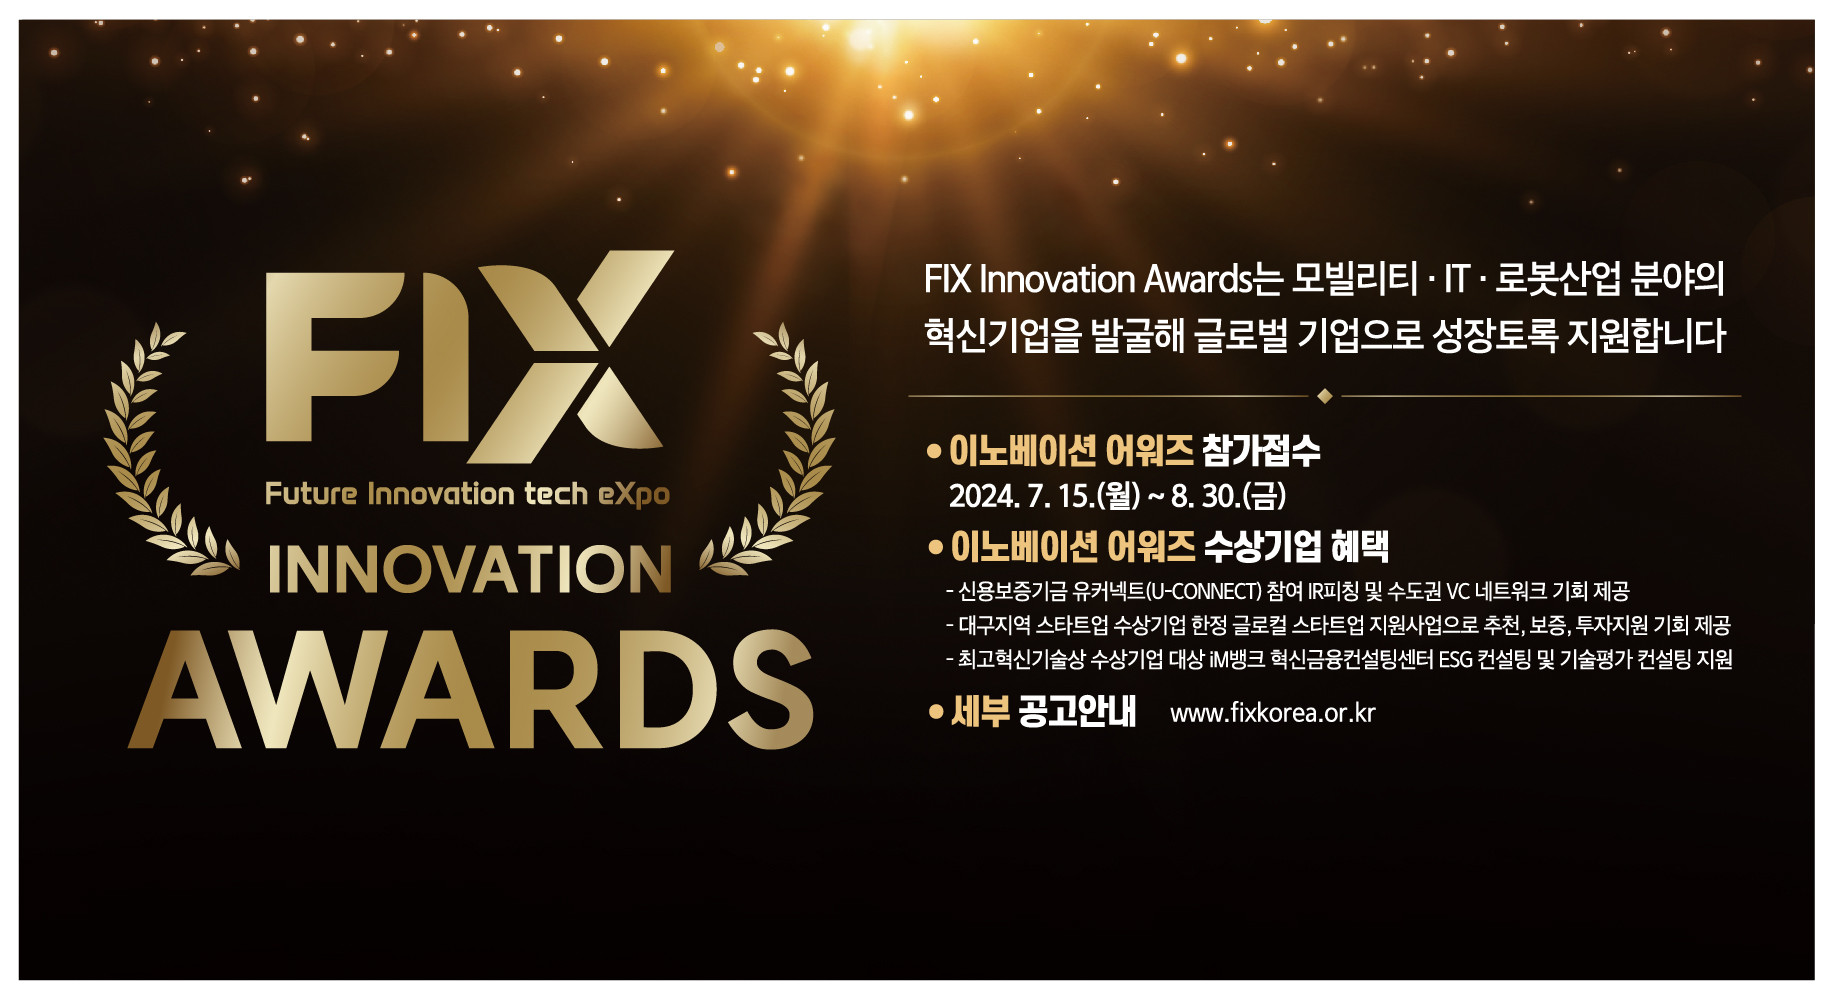 FIX 이노베이션 어워즈(Innovation Awards)’에 도전하세요!(이벤트_윤지혜)